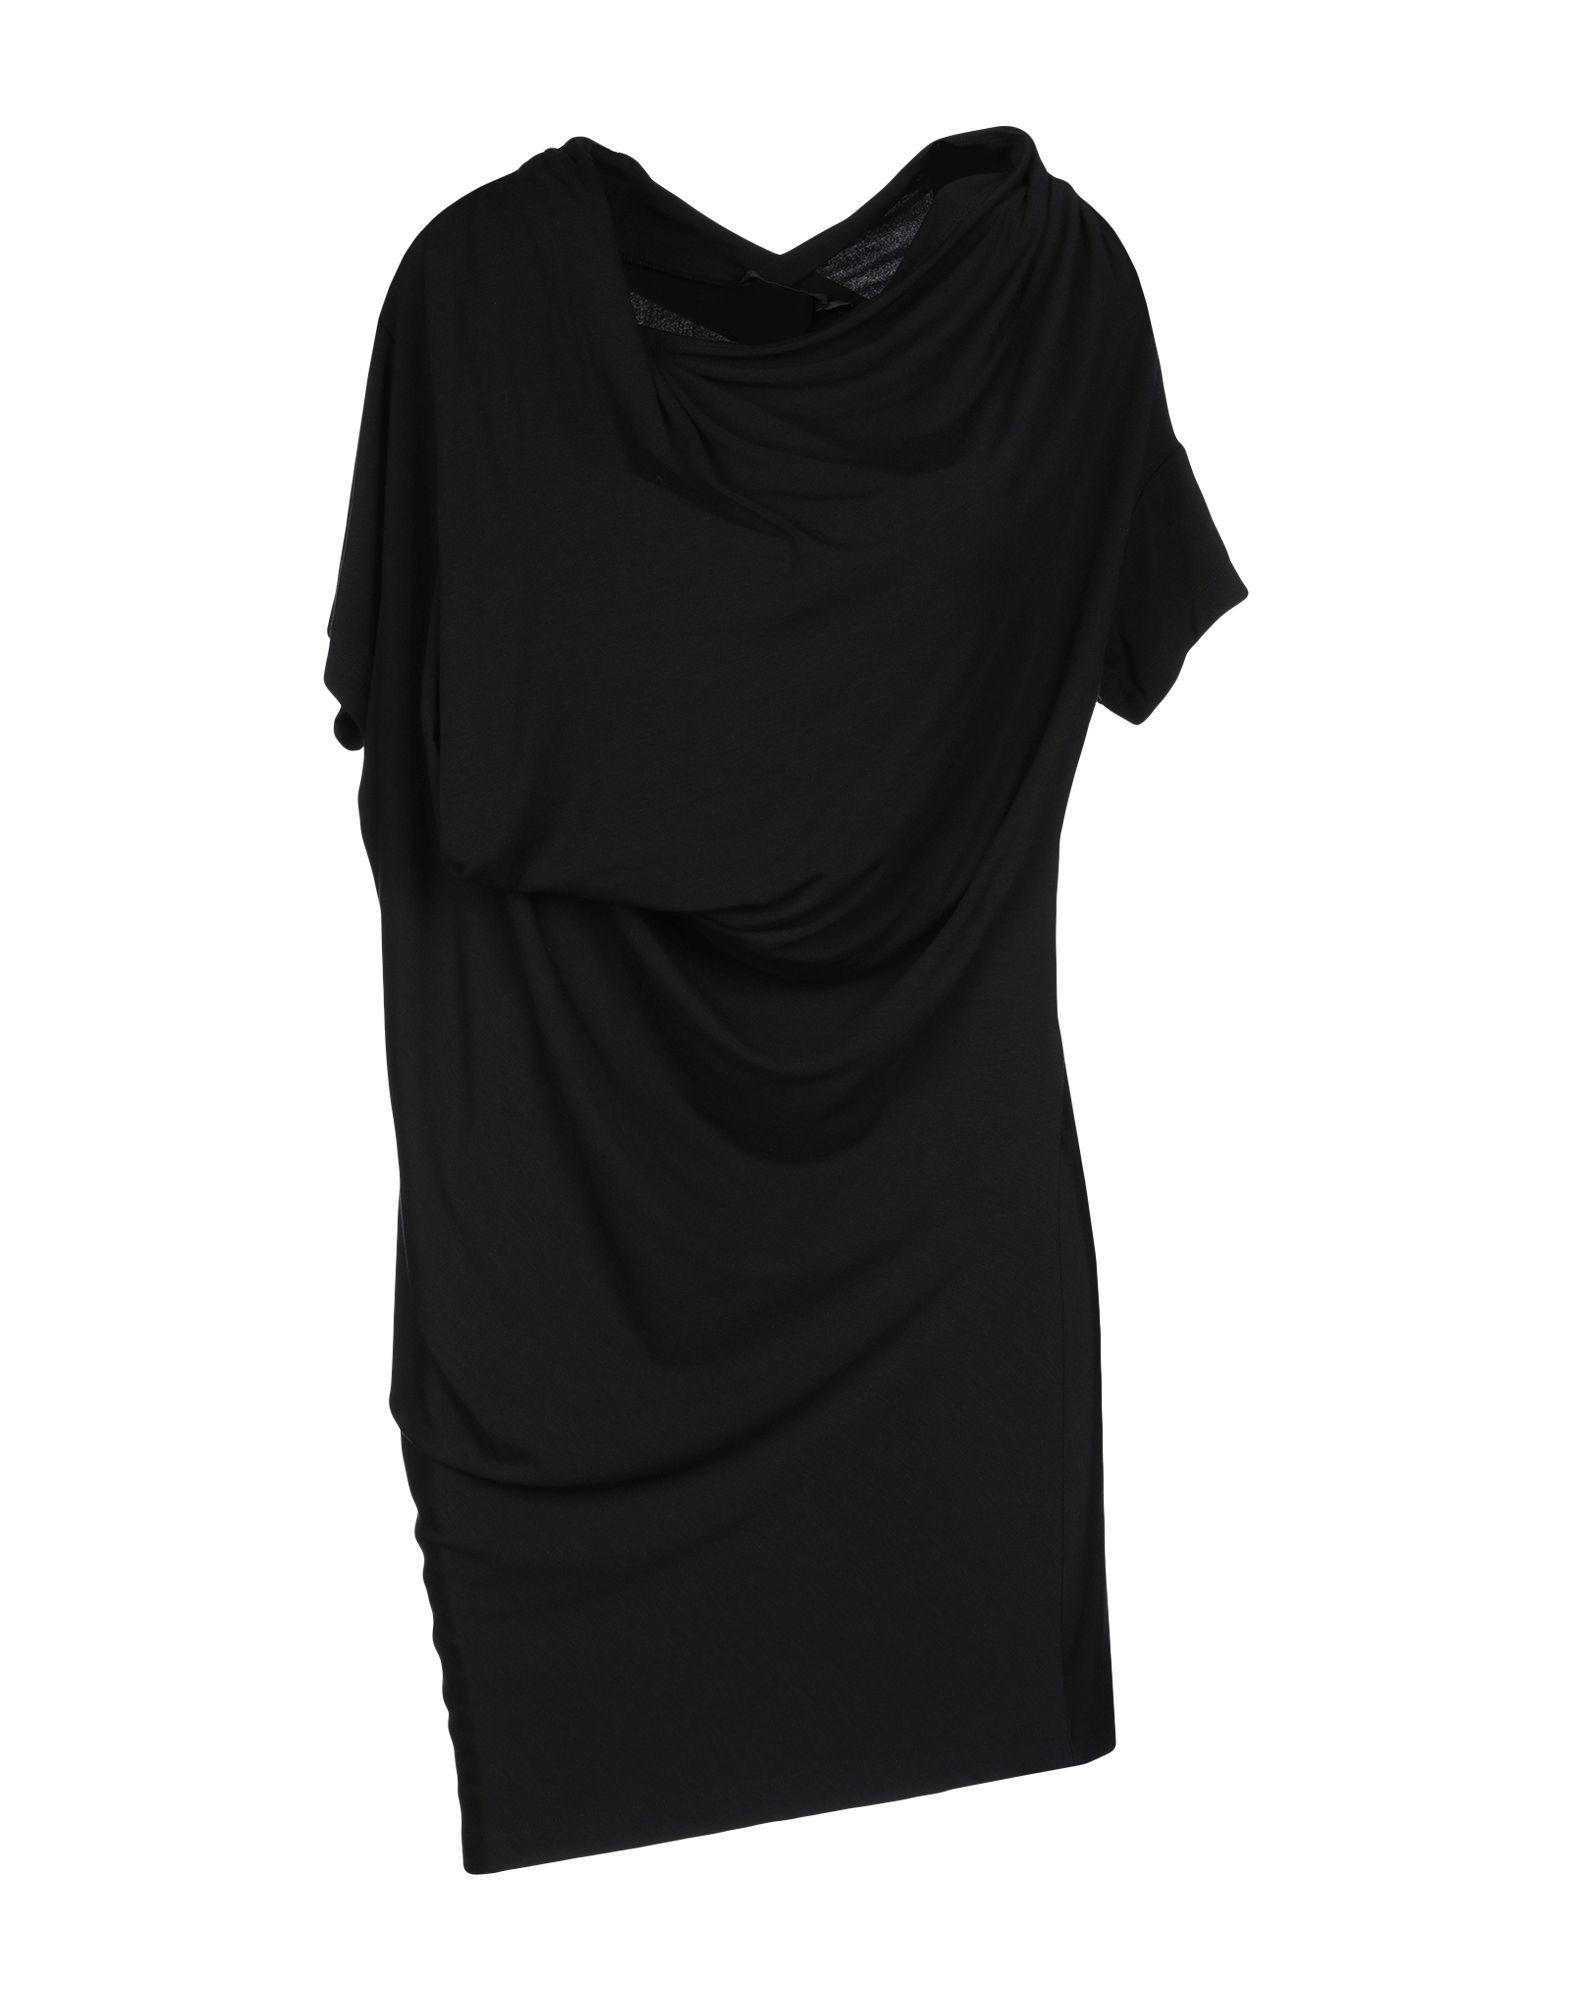 Donna Karan Synthetic T-shirt in Black - Lyst